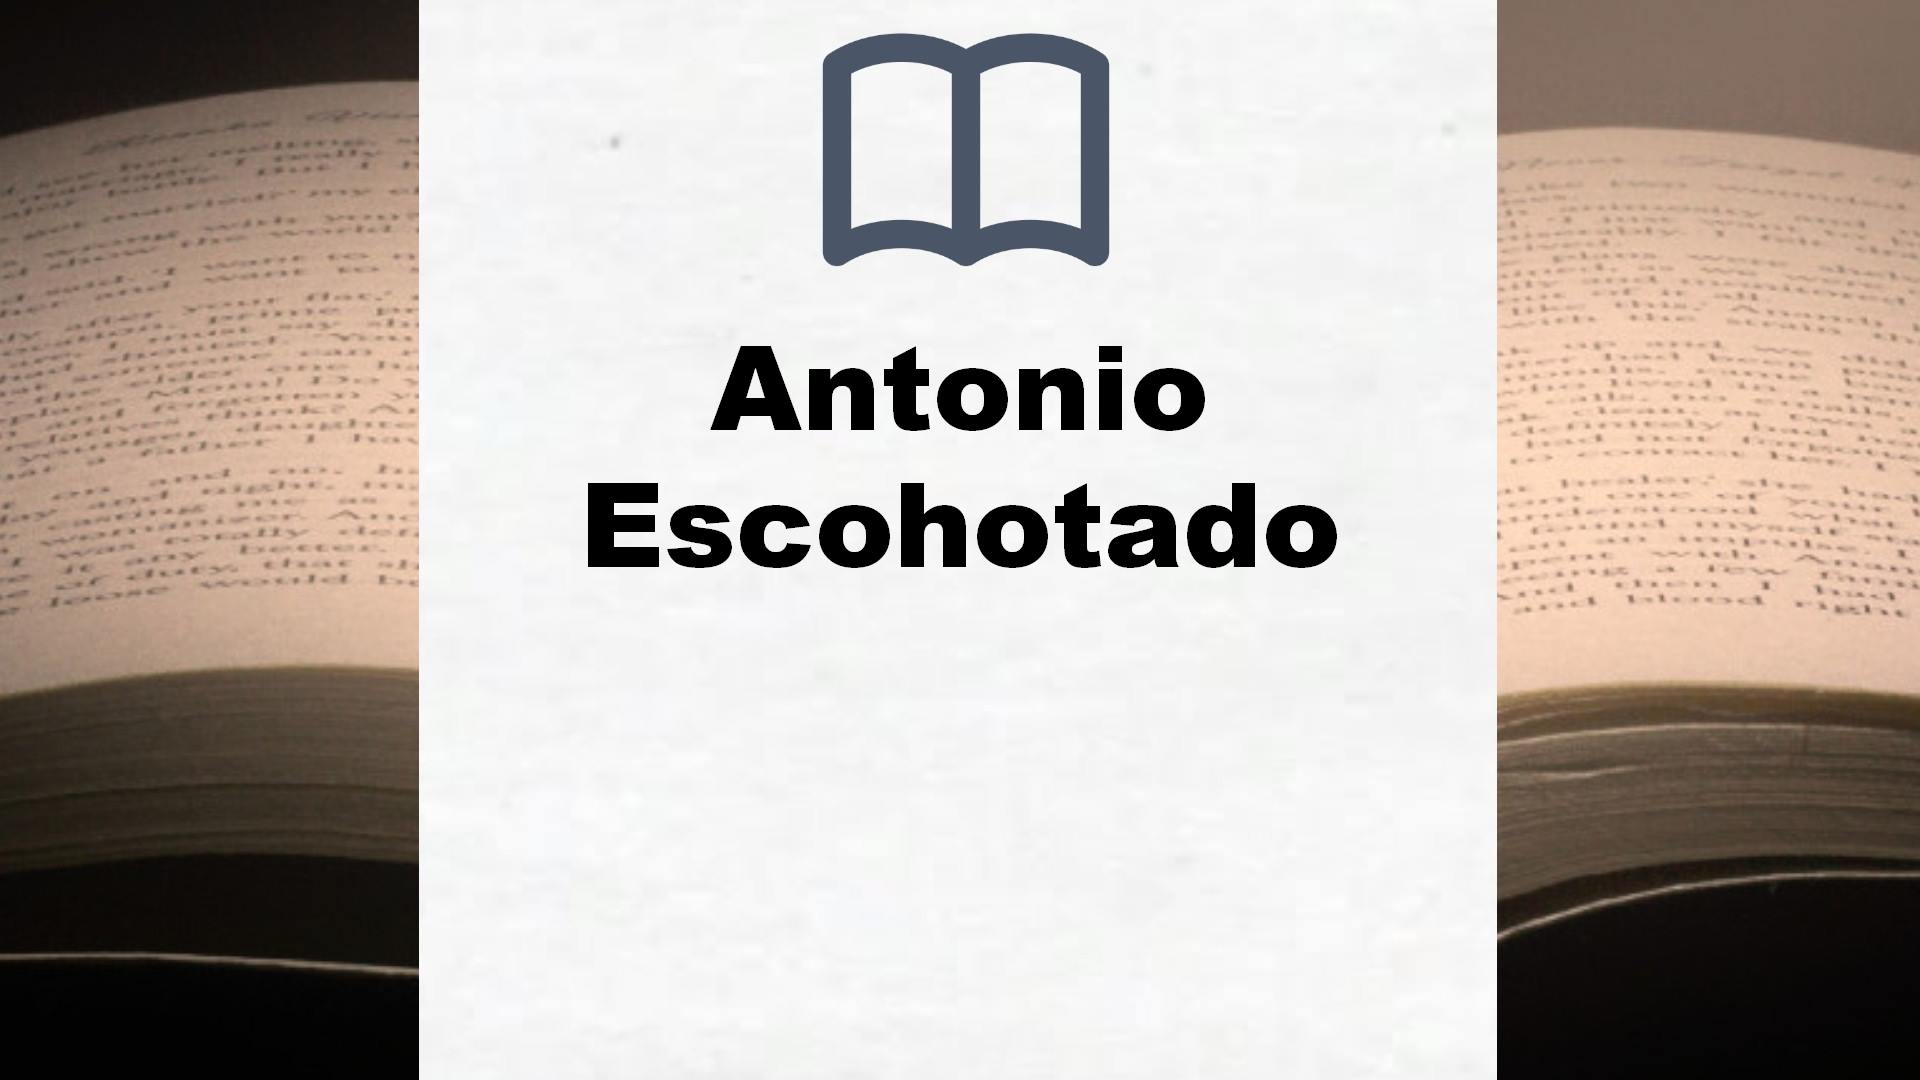 Libros Antonio Escohotado